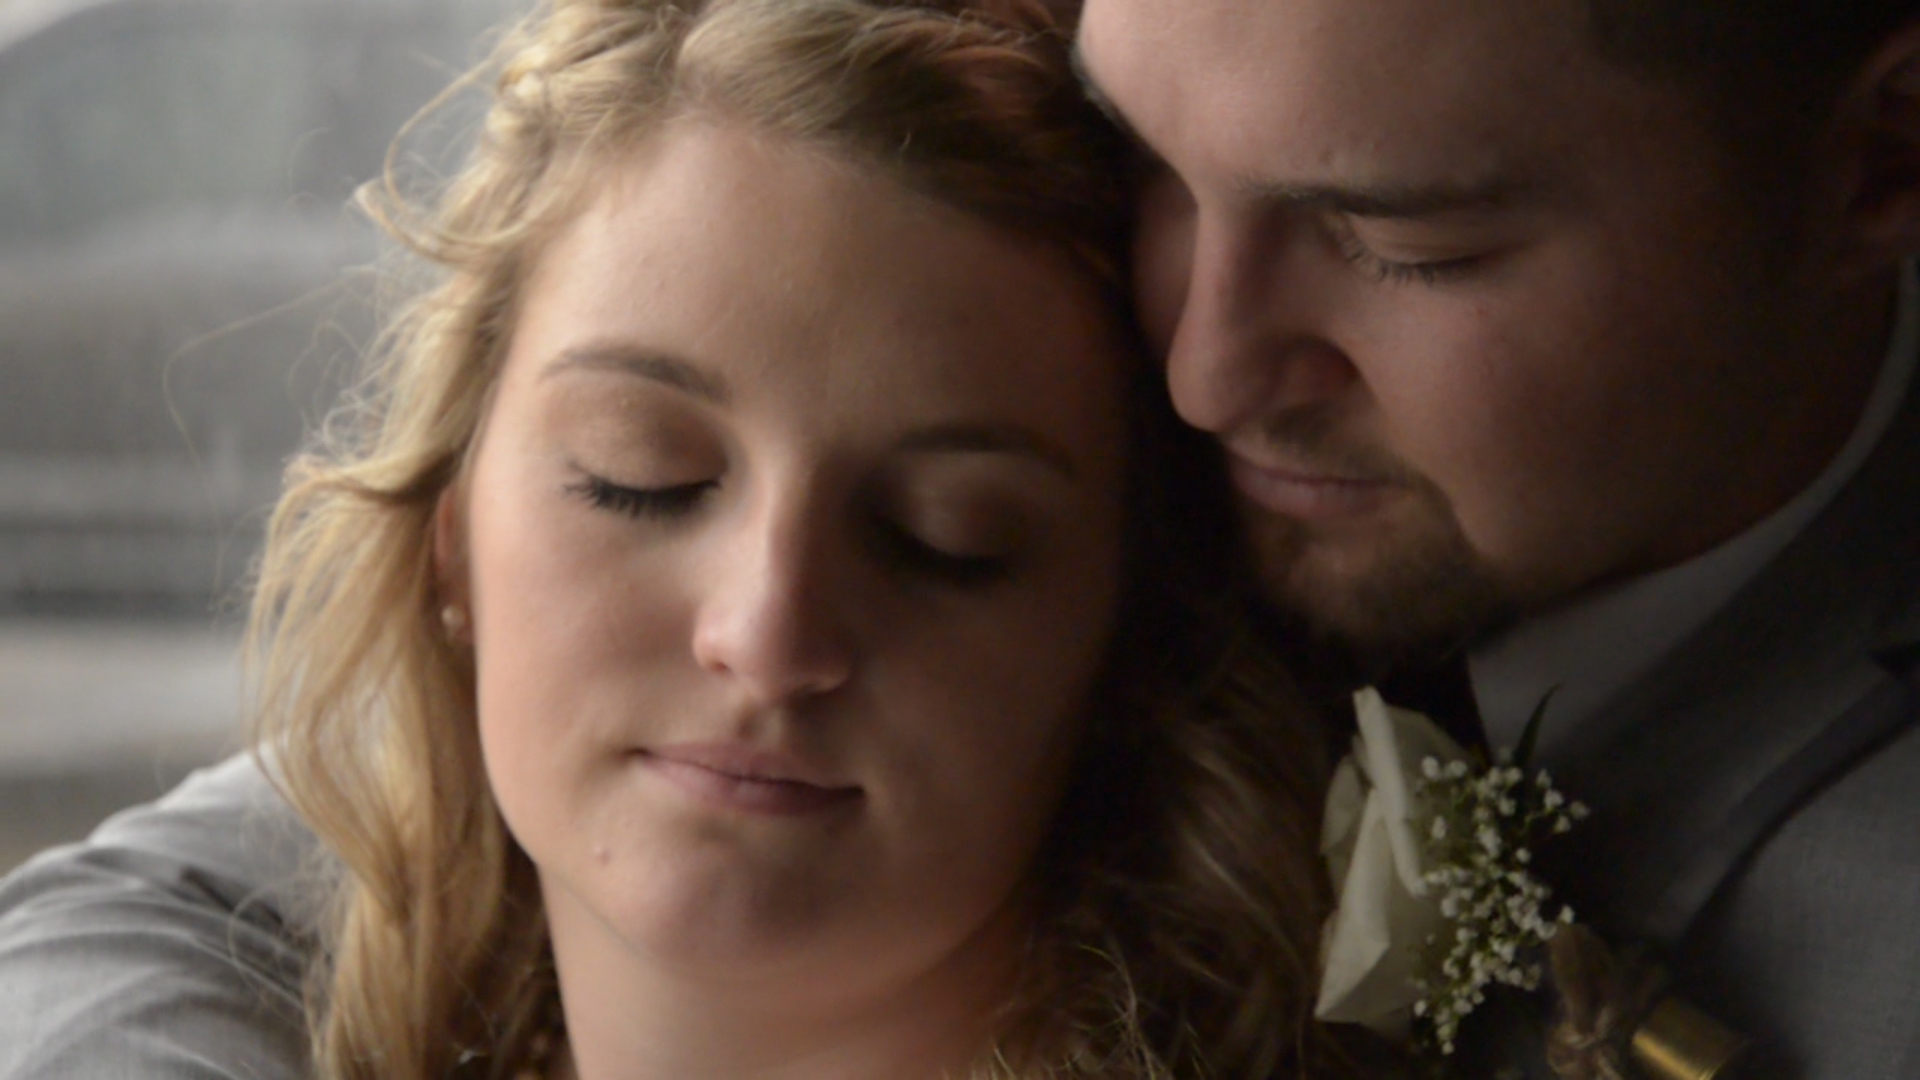 The Denver Unique Wedding Videos